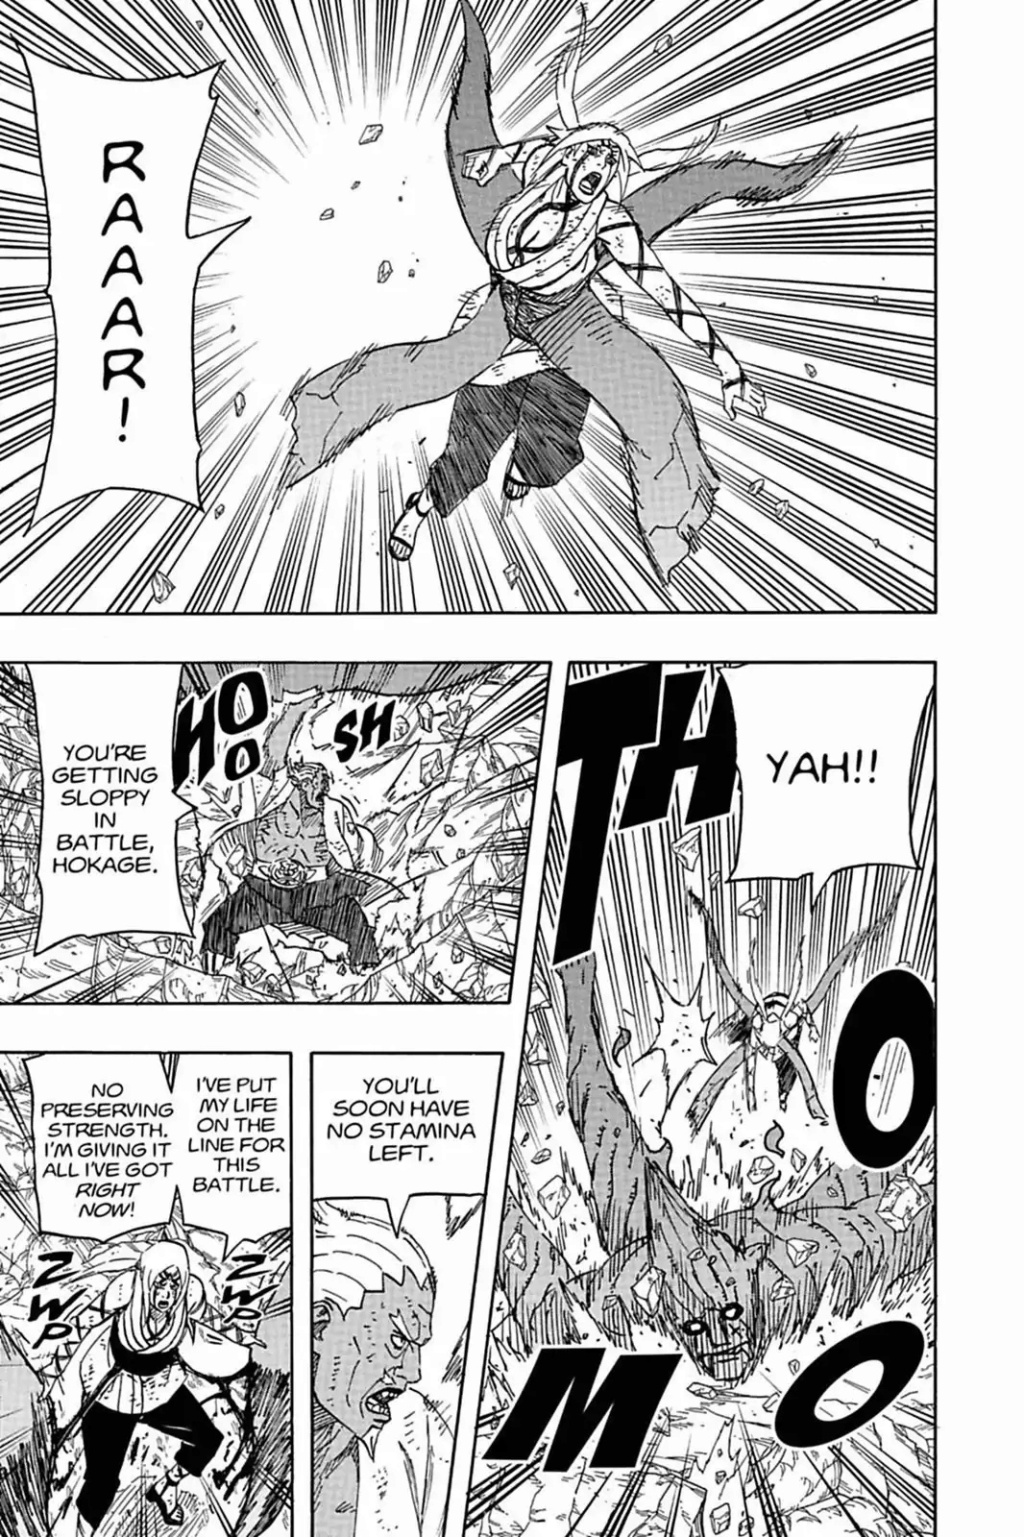 Sakura vs Itachi - Página 3 14_24014